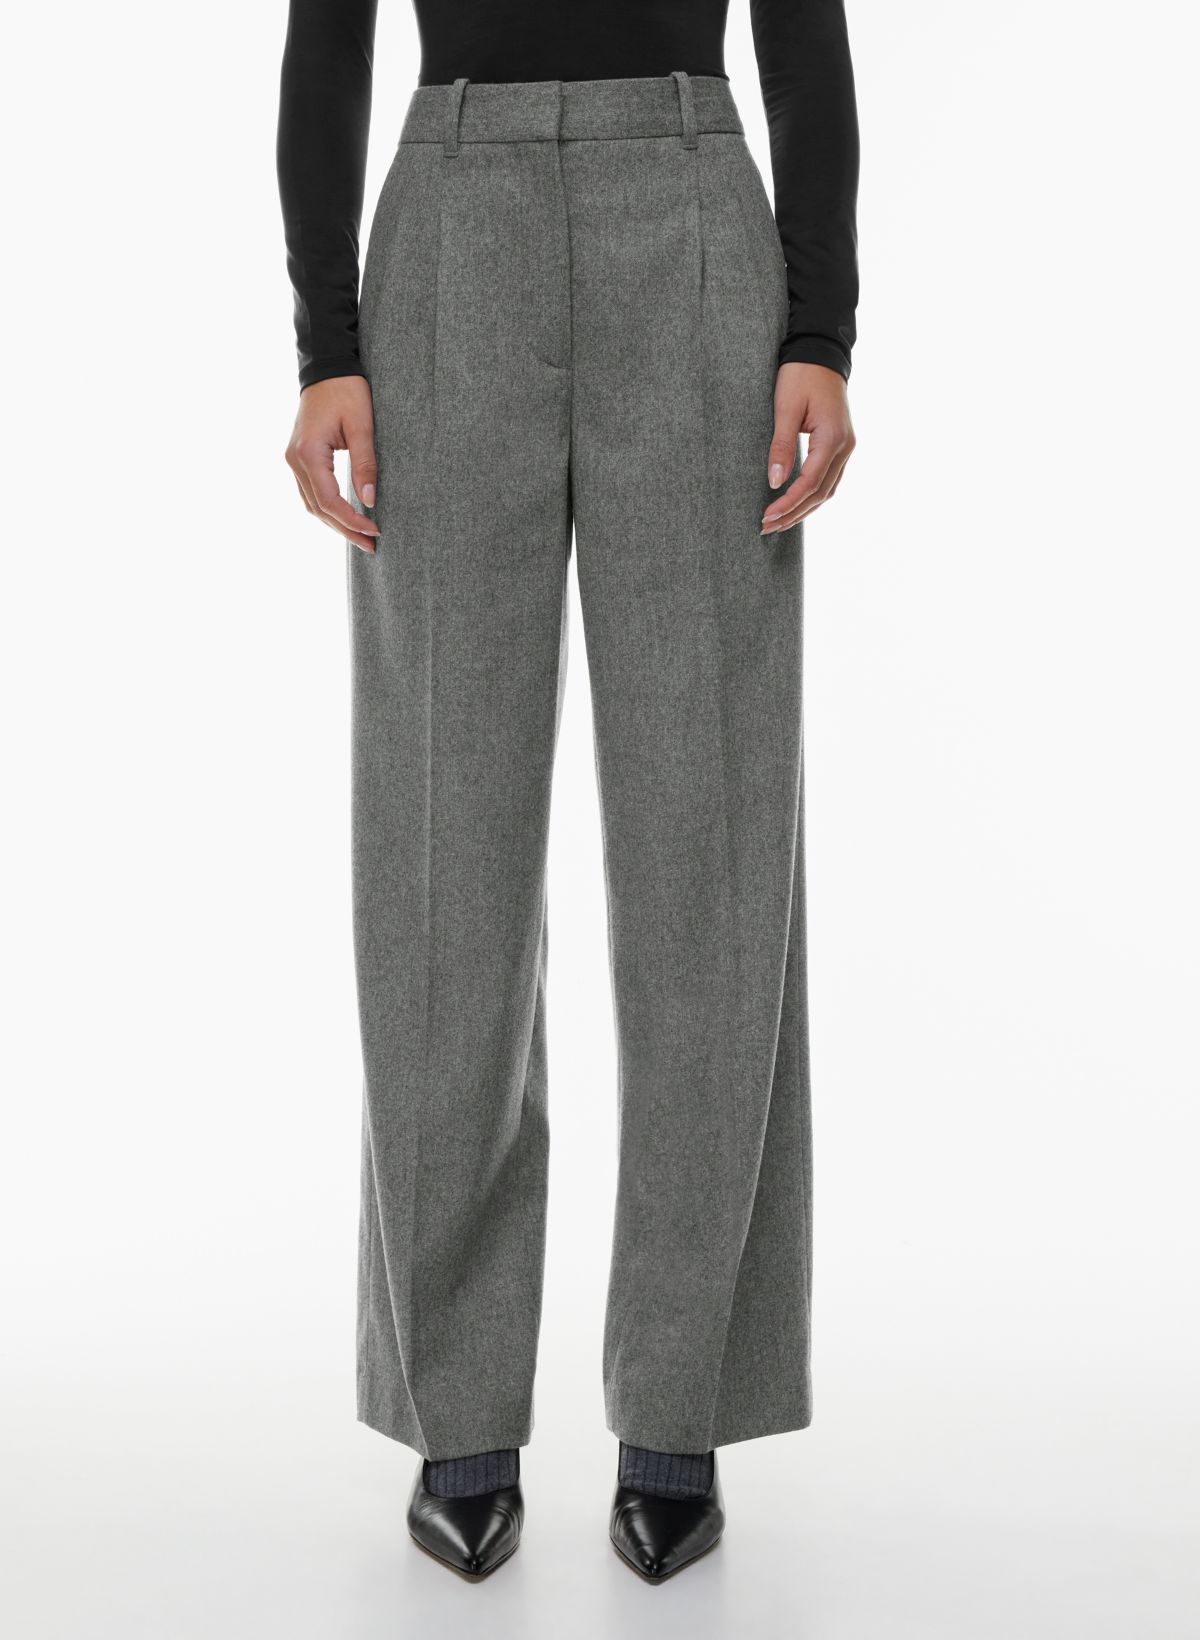 PANTU cashmere pants dark grey